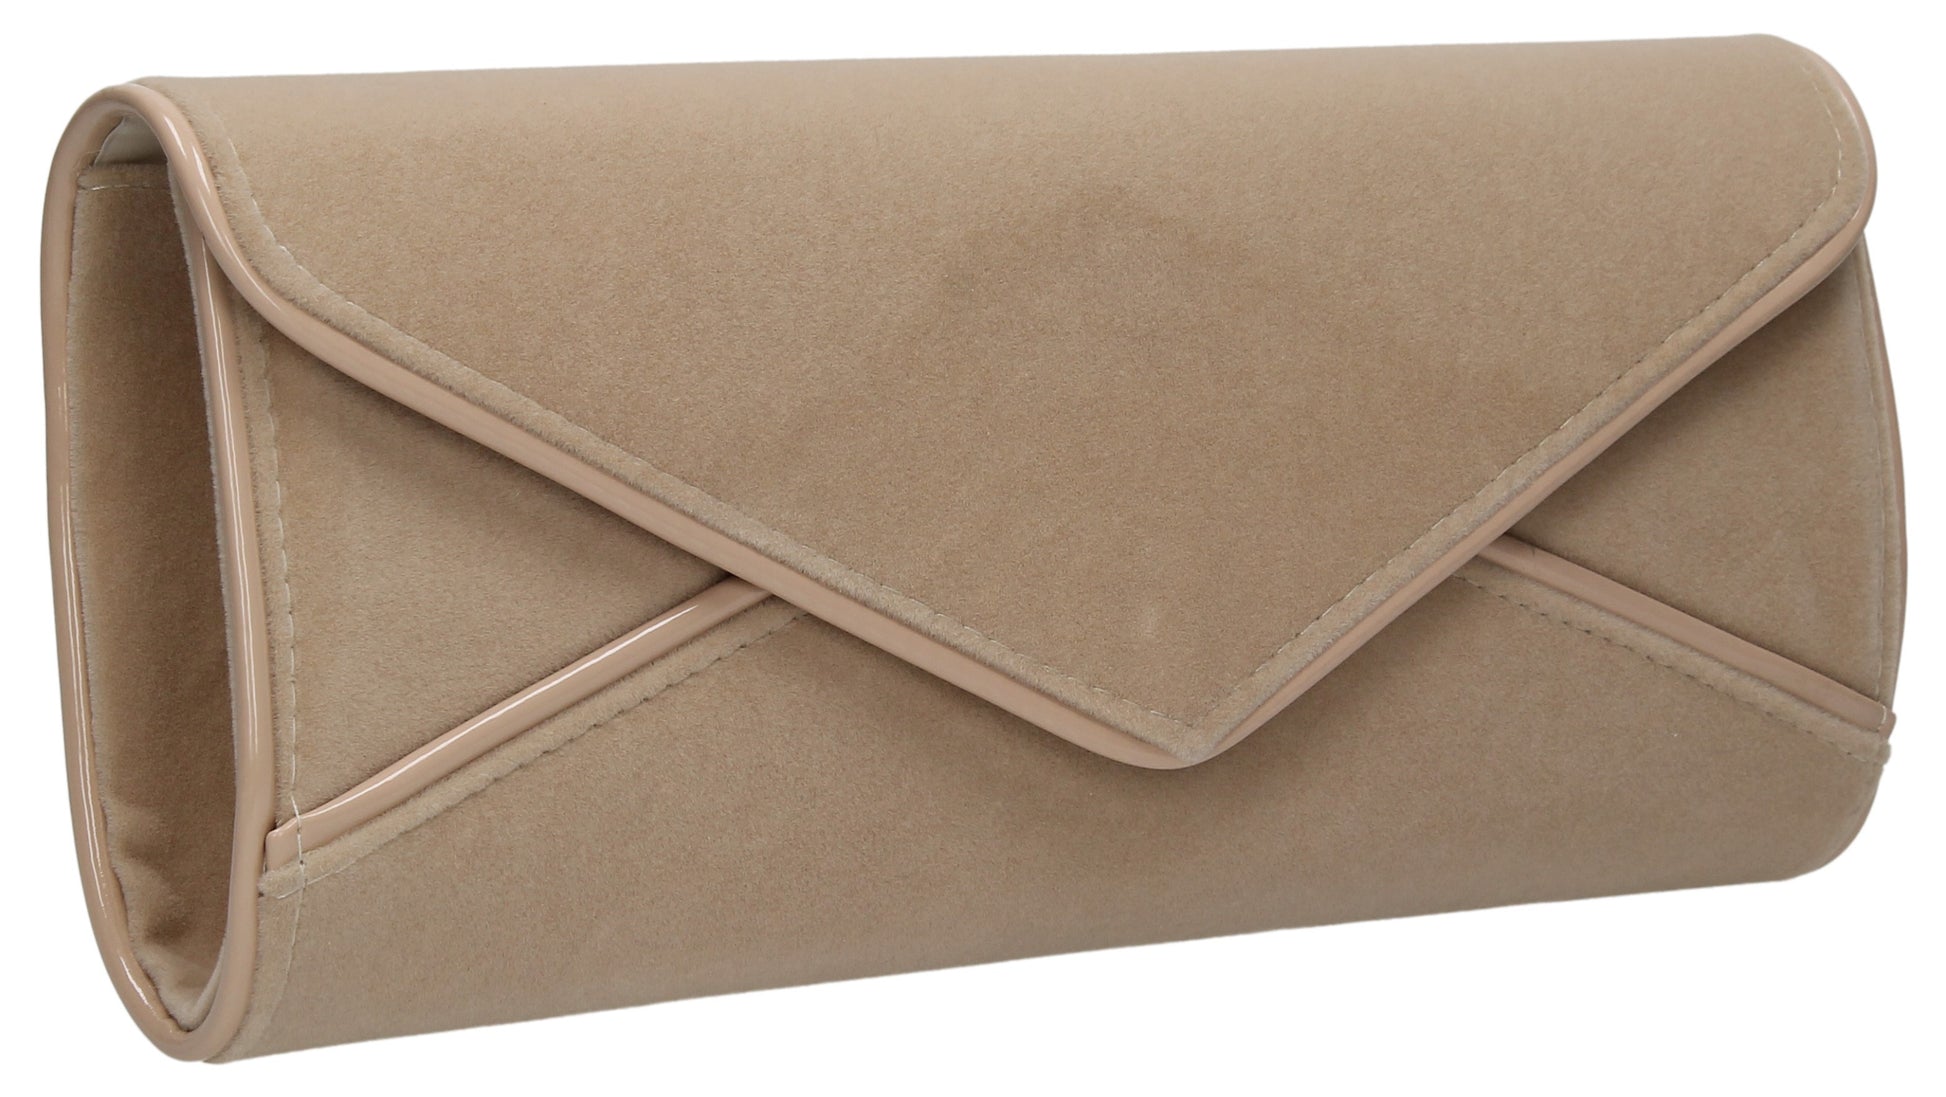 SWANKYSWANS Perry Velvet Clutch Bag - Beige Cute Cheap Clutch Bag For Weddings School and Work